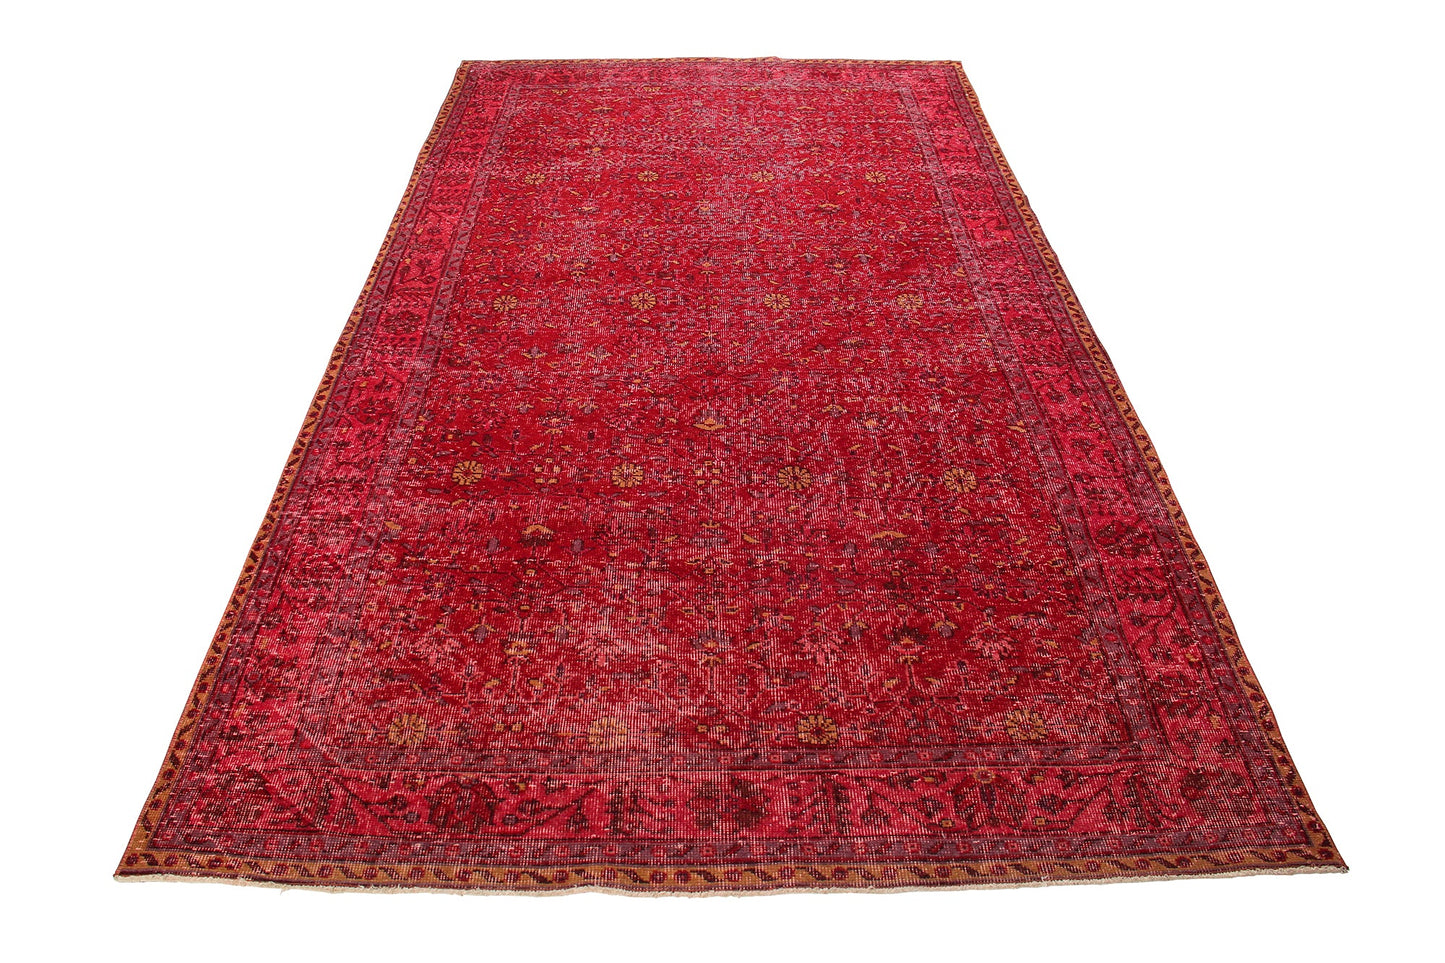 Vintage Wool Handmade Turkish Red Carpet product image #27556268769450